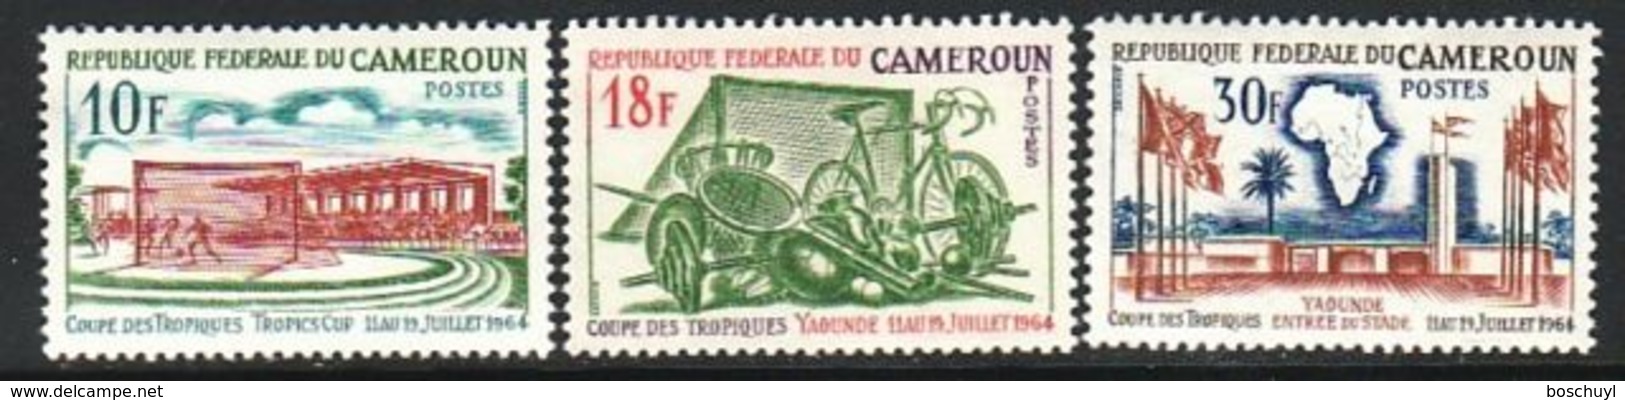 Cameroun, 1964, Sports, Tropics Cup, Soccer, Football, MNH, Michel 405-407 - Camerún (1960-...)